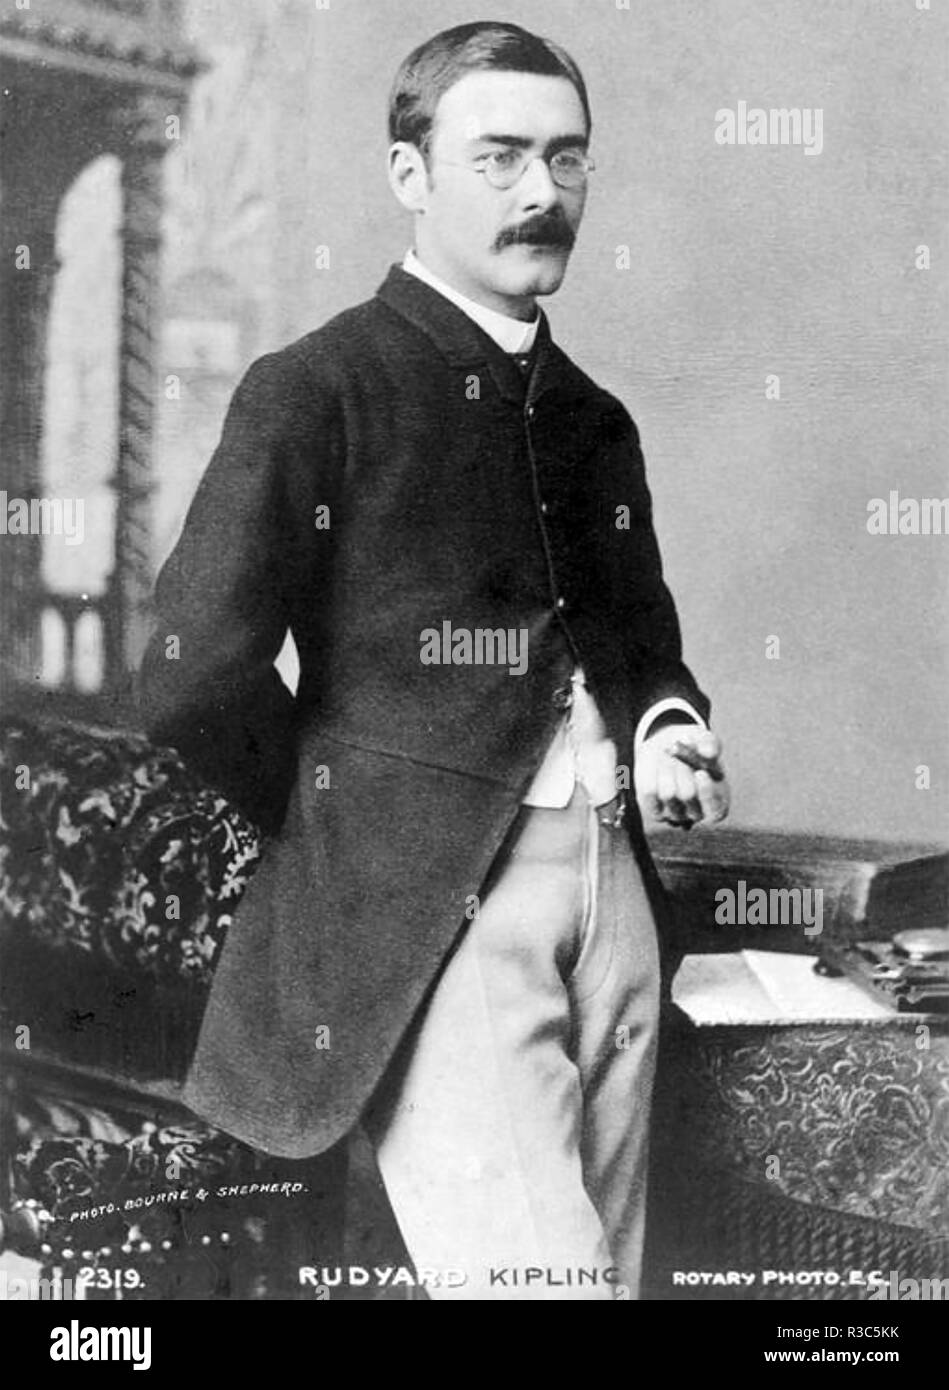 RUDYARD KIPLING (1865-1936) English journalist, poet and novelist about  1895 Stock Photo - Alamy